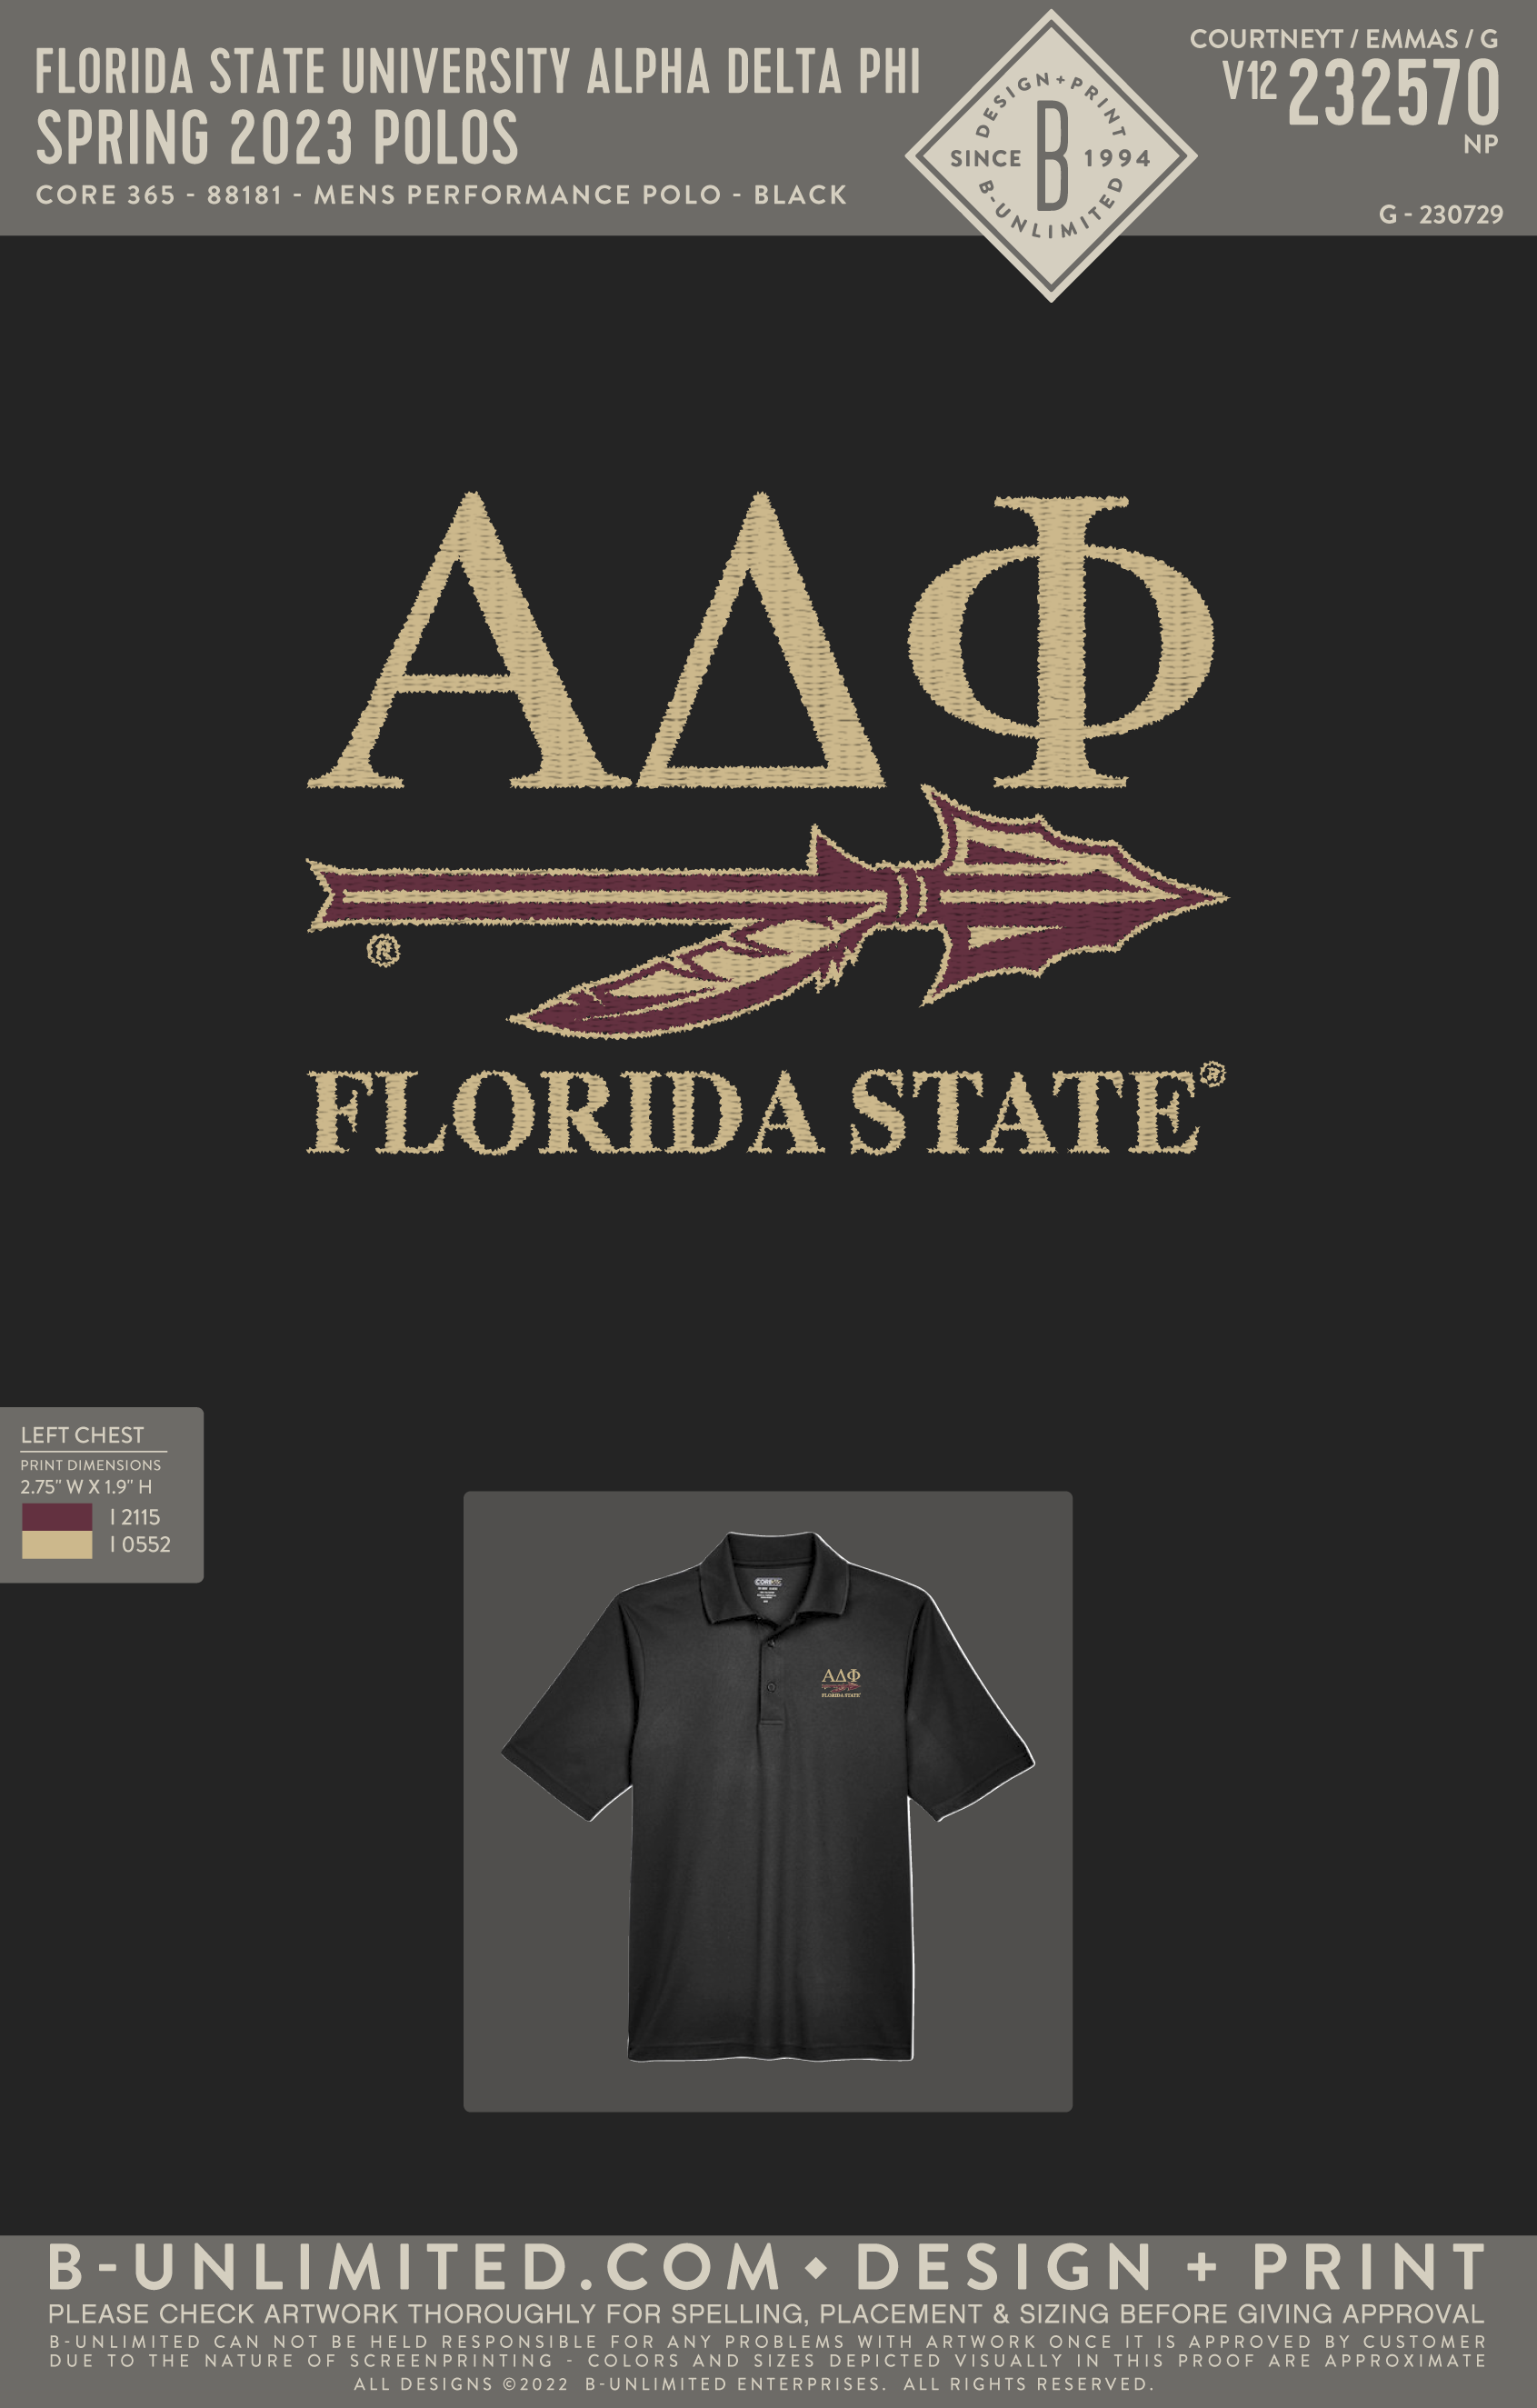 Florida State University Alpha Delta Phi - Spring 2023 Polos - Core 365 - 88181 - Polo - Black